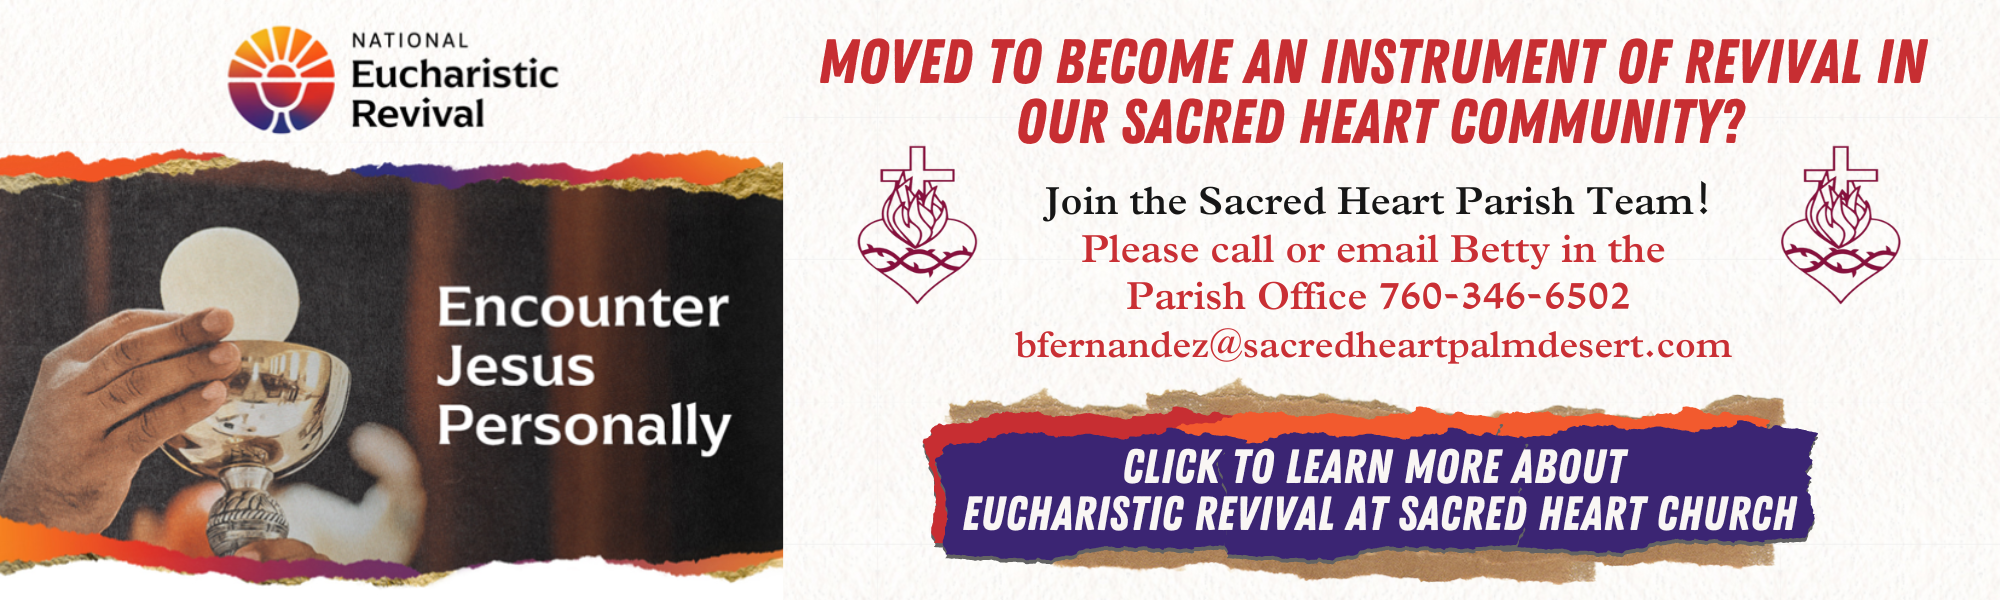 Eucharistic Revival Meeting July 20 6pm